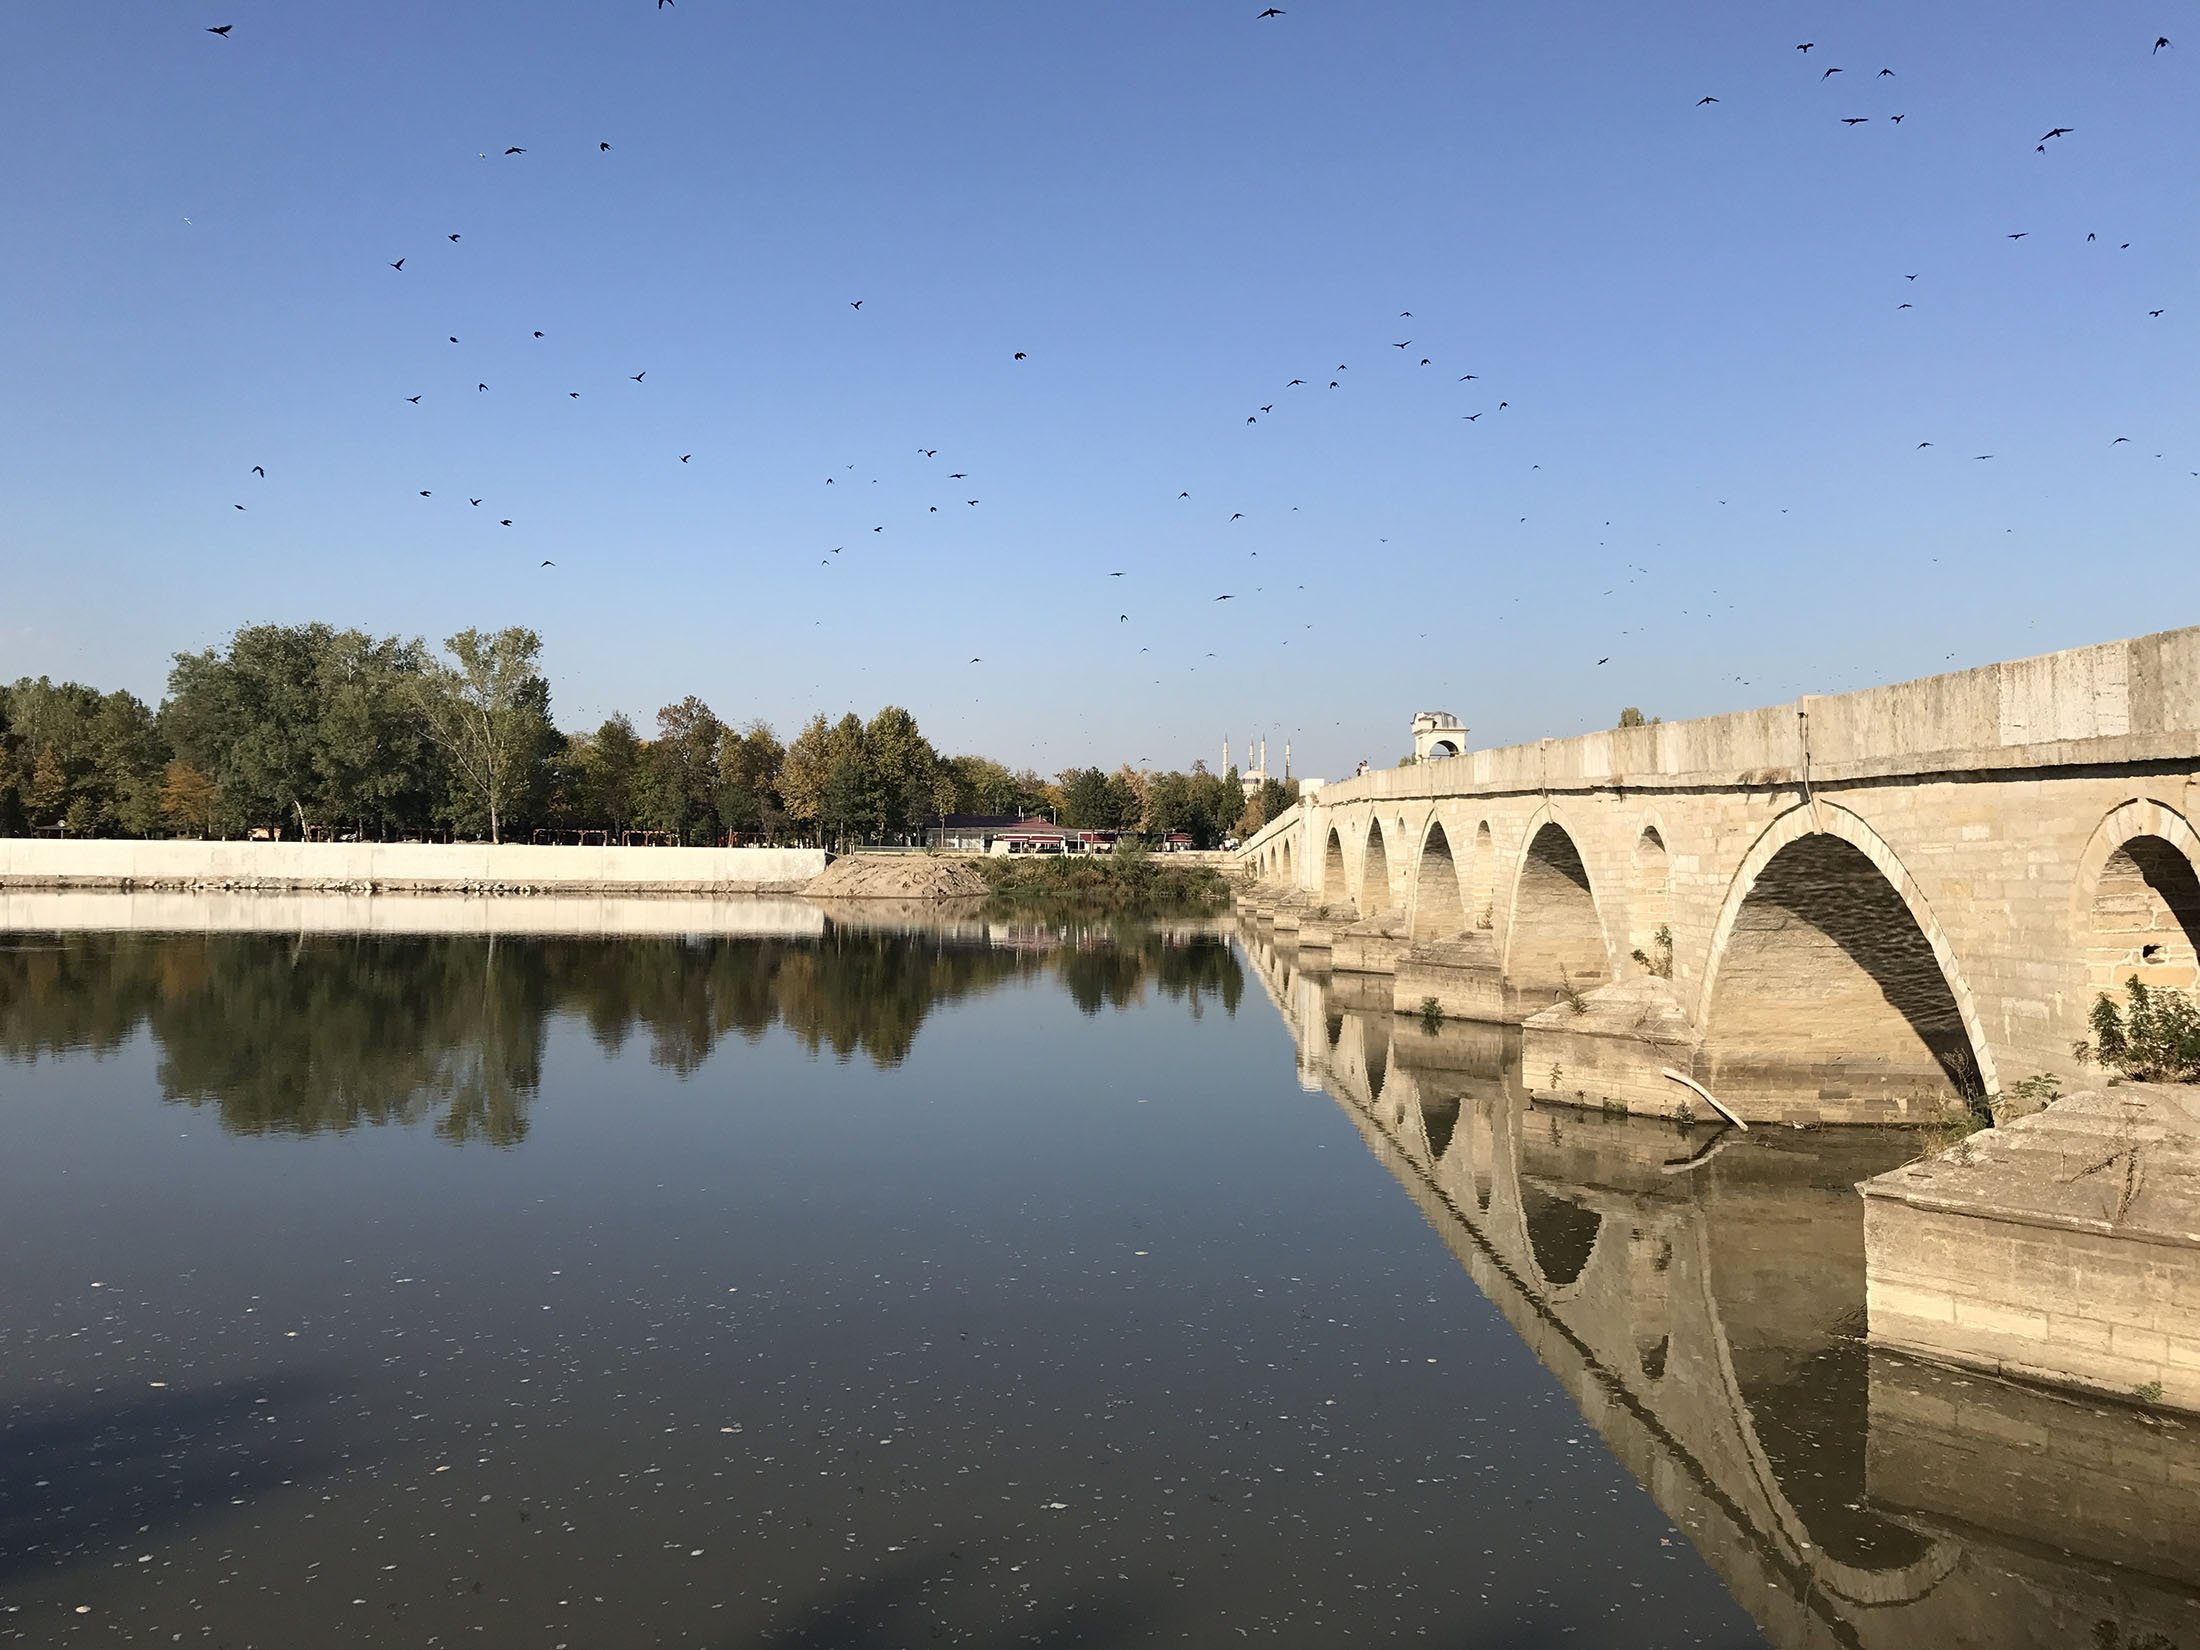 Meriç Bridge is a wonderful place and one of the symbols of Edirne. (Photo by Özge Şengelen)